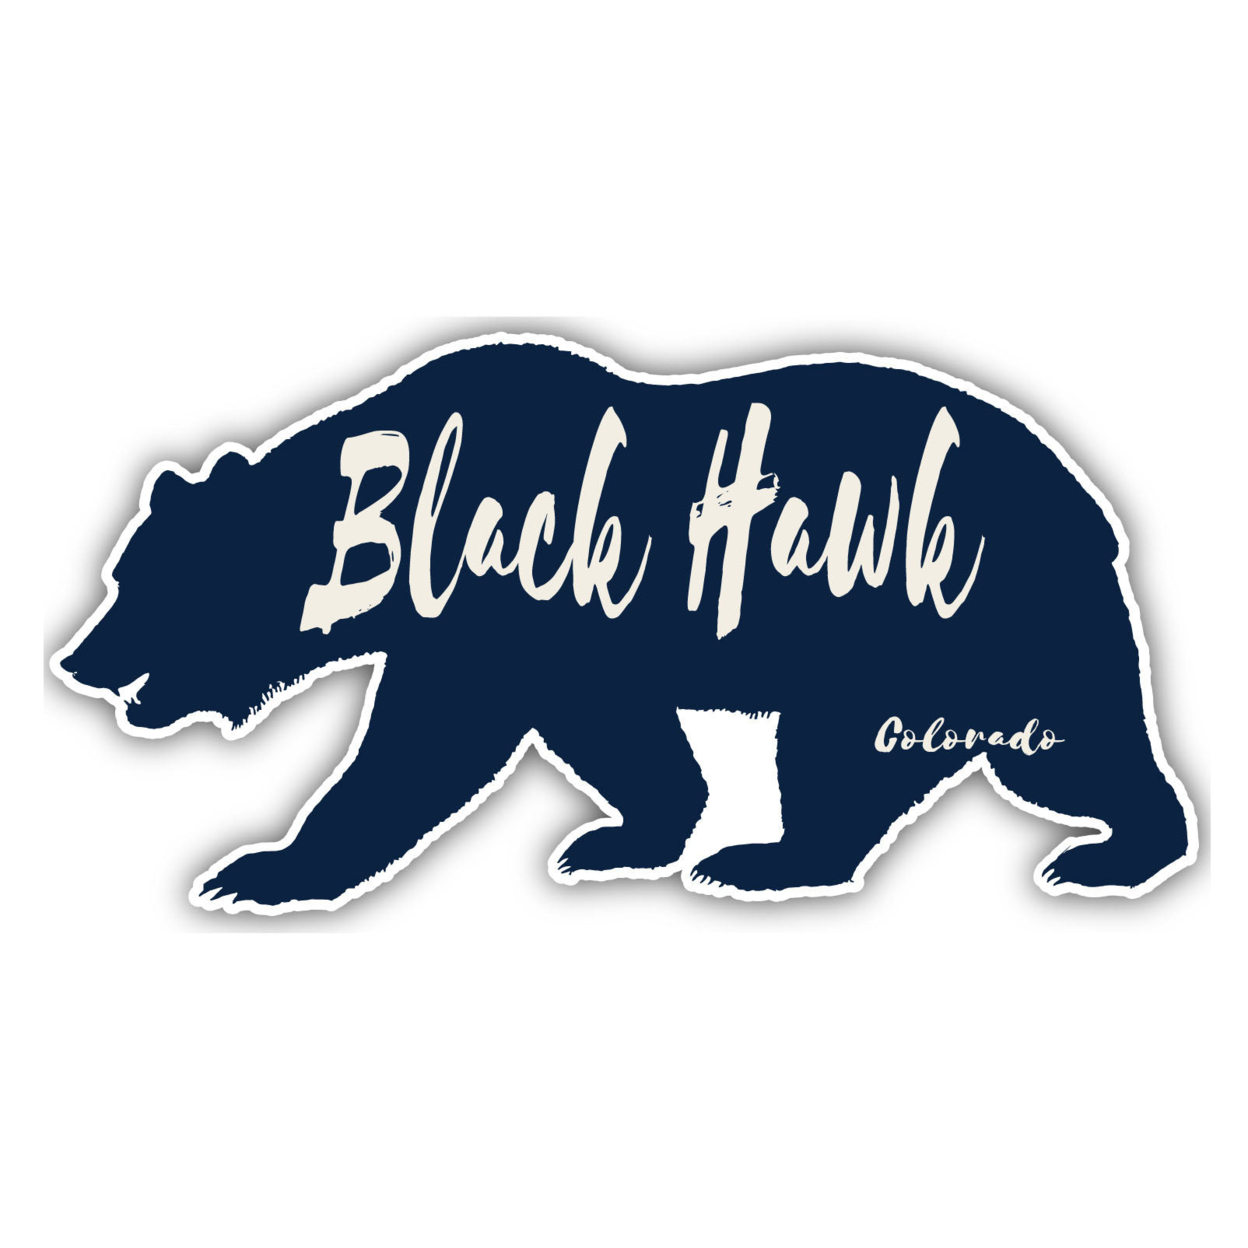 Black Hawk Colorado Souvenir Decorative Stickers (Choose Theme And Size) - Single Unit, 2-Inch, Tent